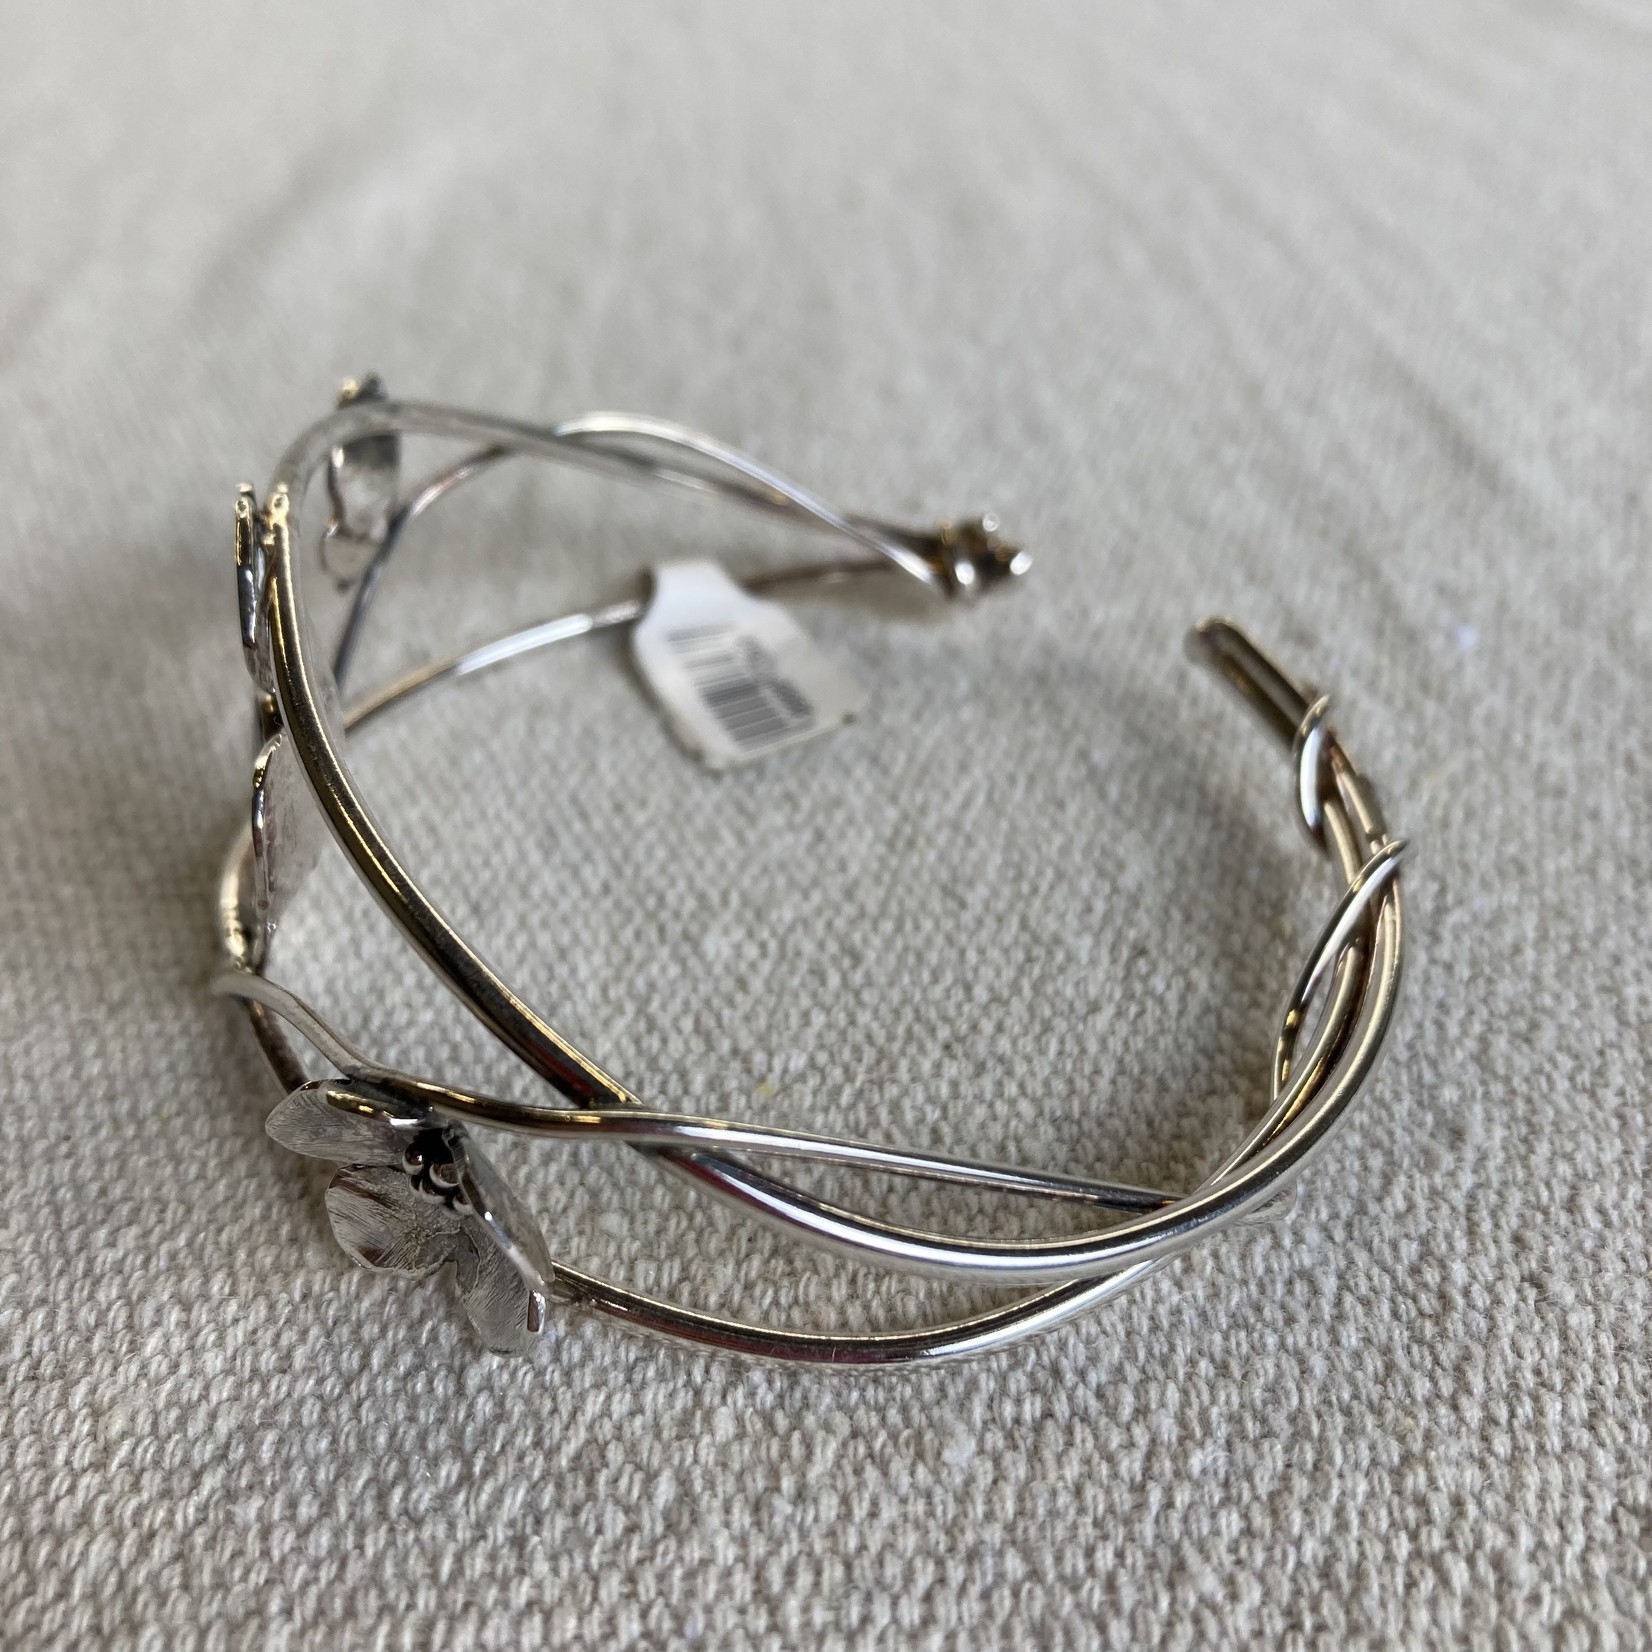 Fishbone Designs FB Sterling Silver Flower Bracelet with Amethyst